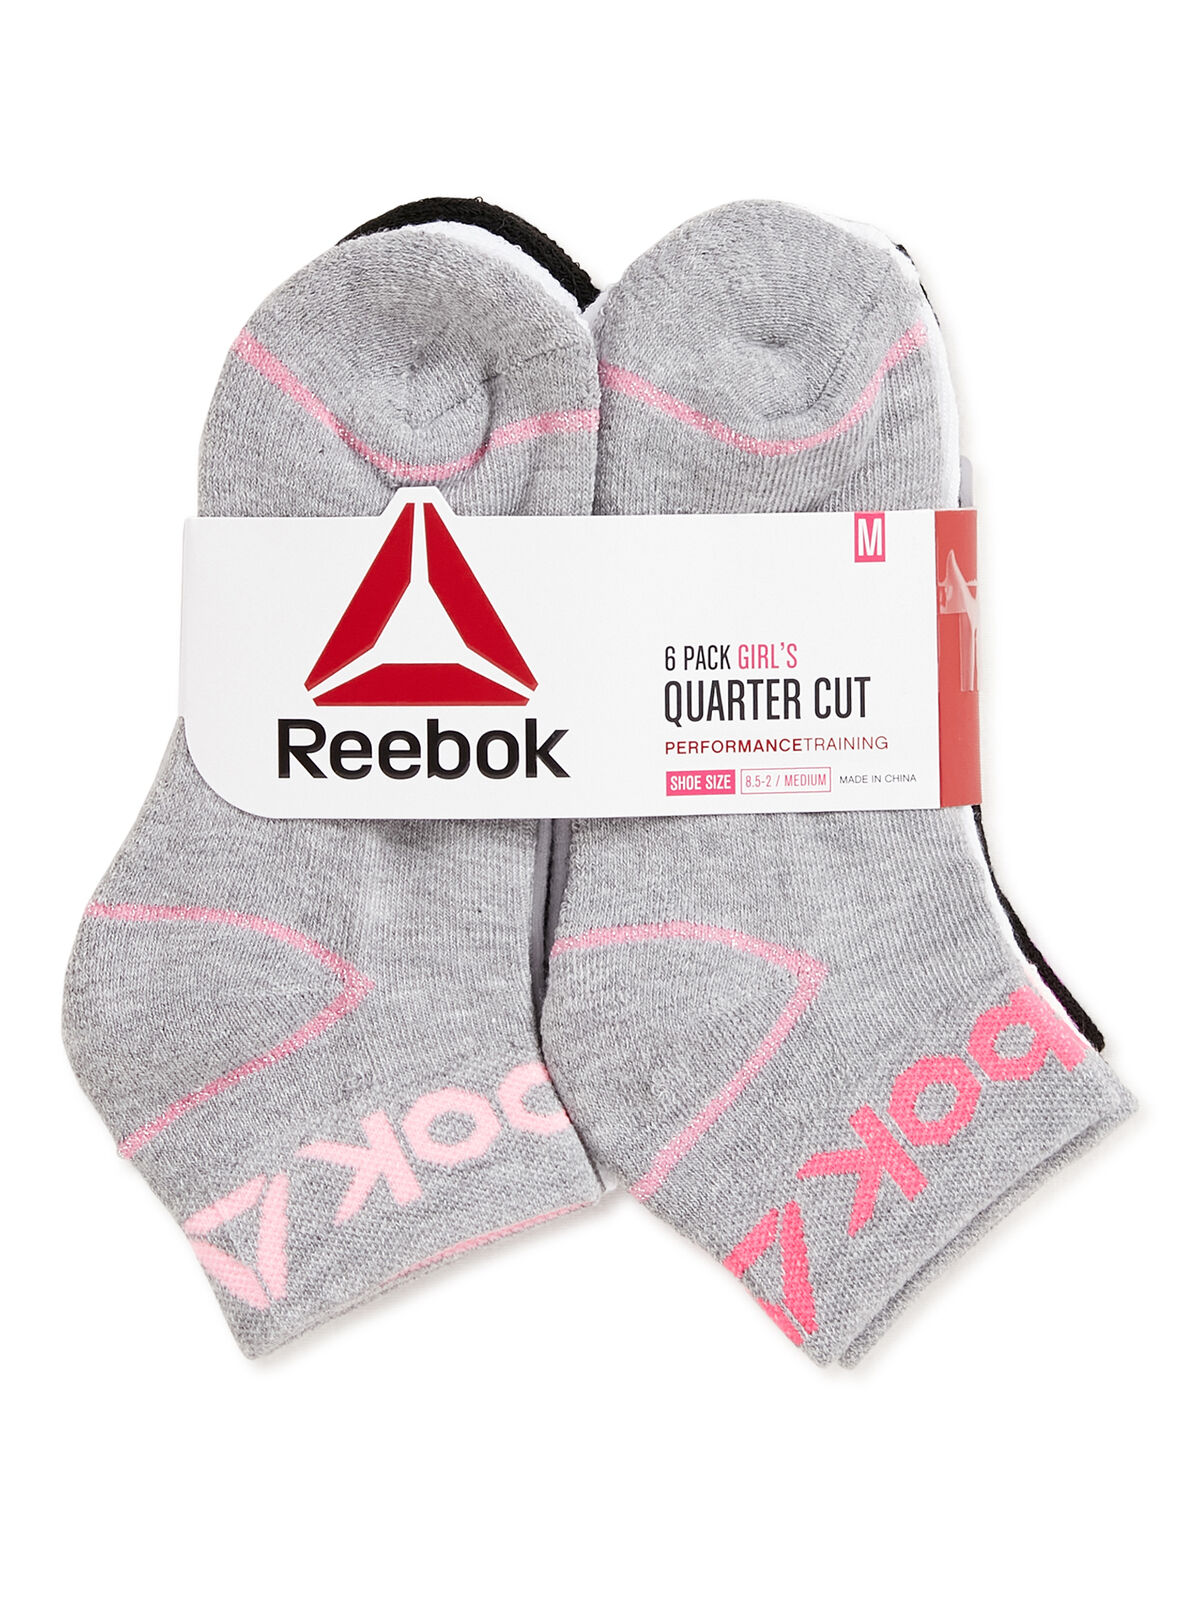 Reebok Girls Quarter Cut Socks 6-Pack Assorted Colors Gray